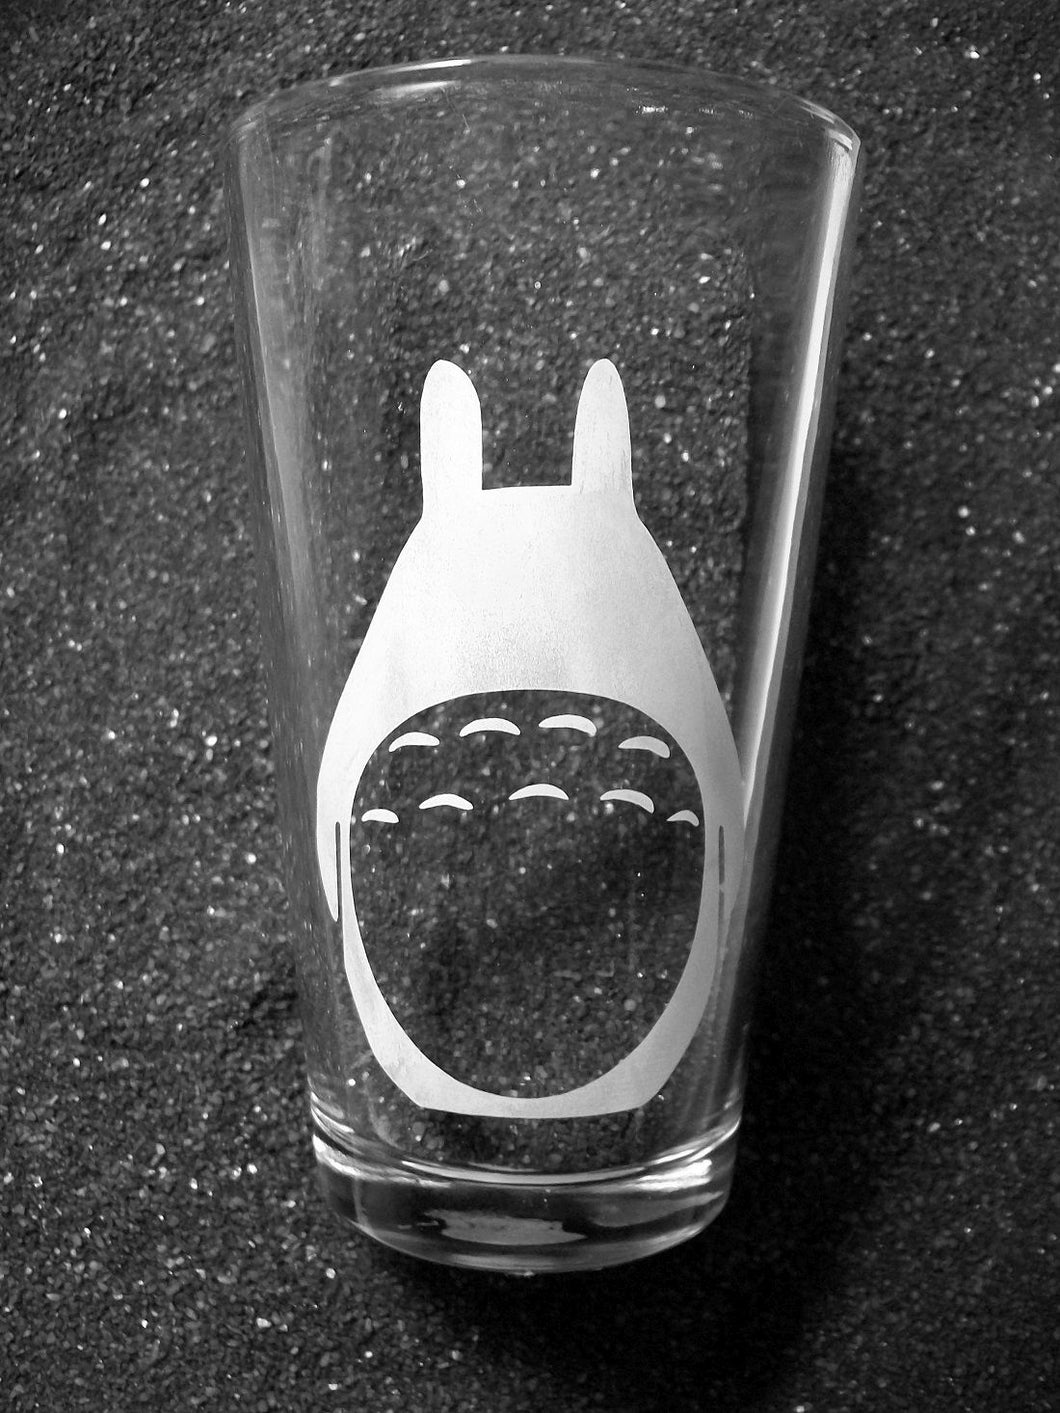 My Neighbor Totoro etched pint glass tumbler cup Studio Ghibli fanart